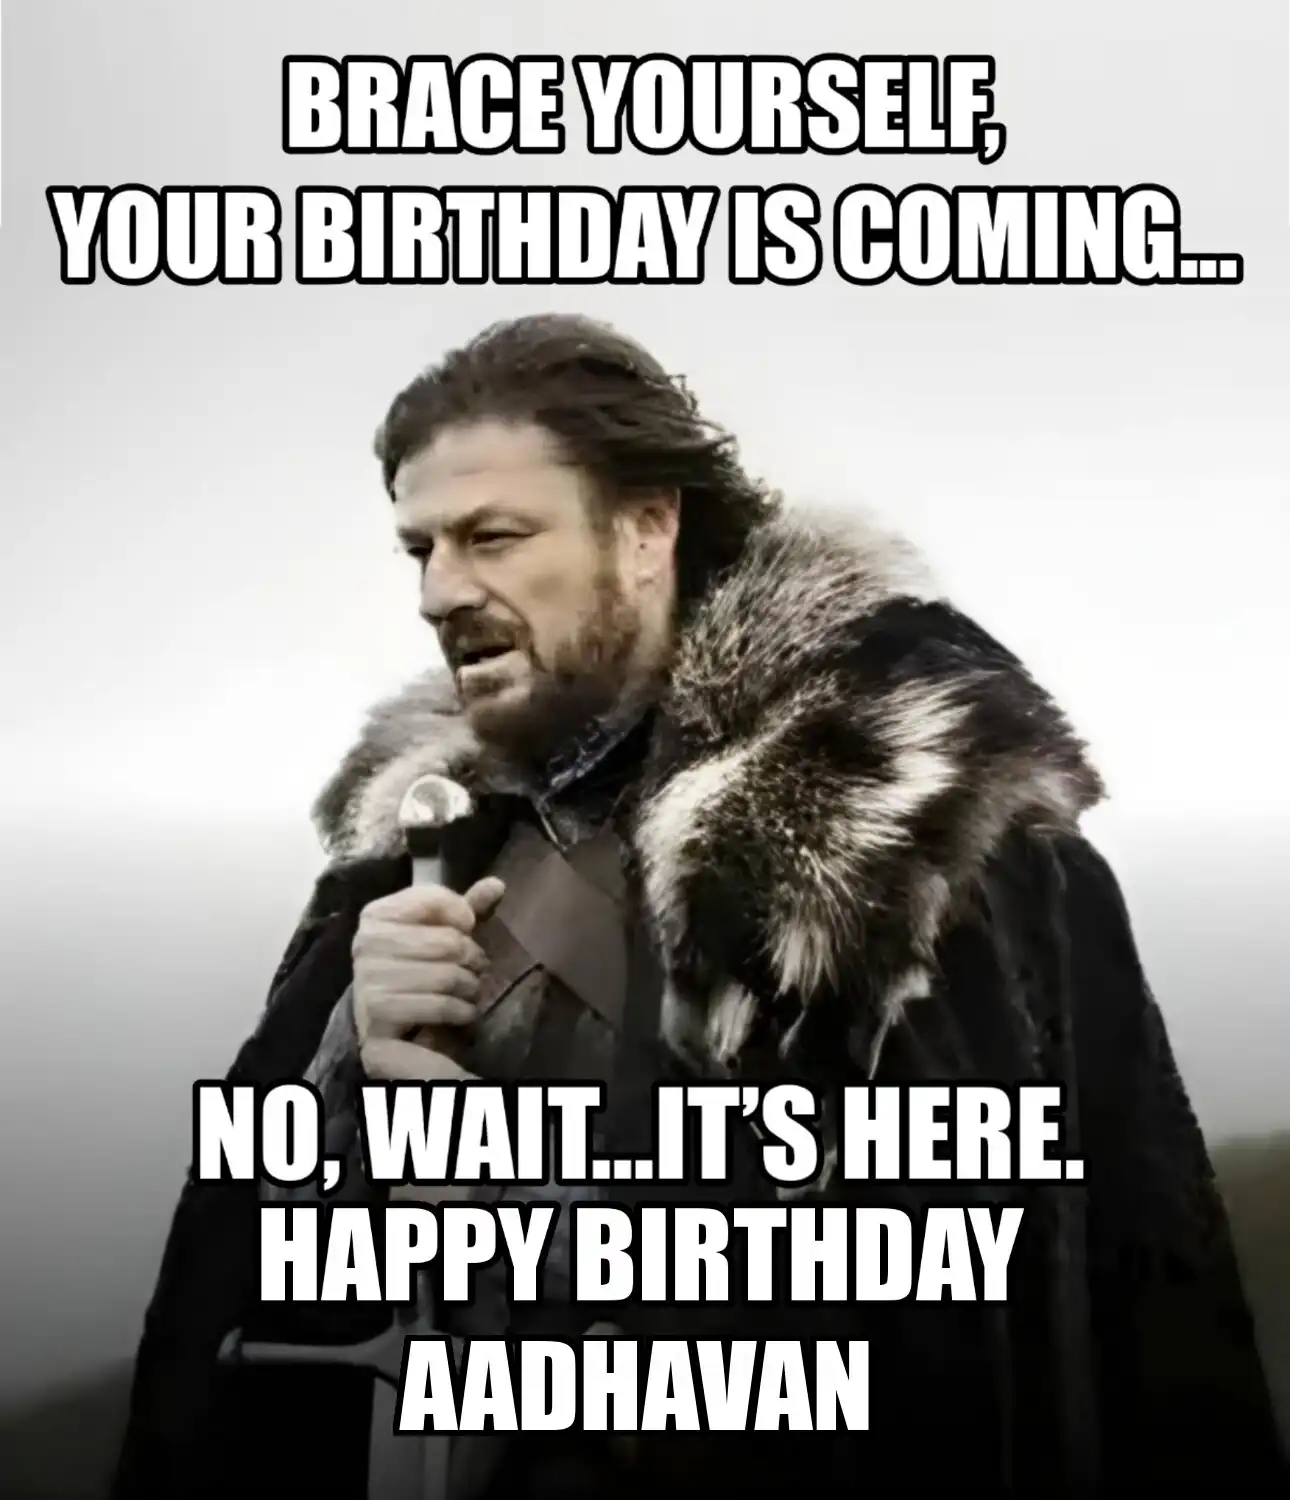 Happy Birthday Aadhavan Brace Yourself Your Birthday Is Coming Meme